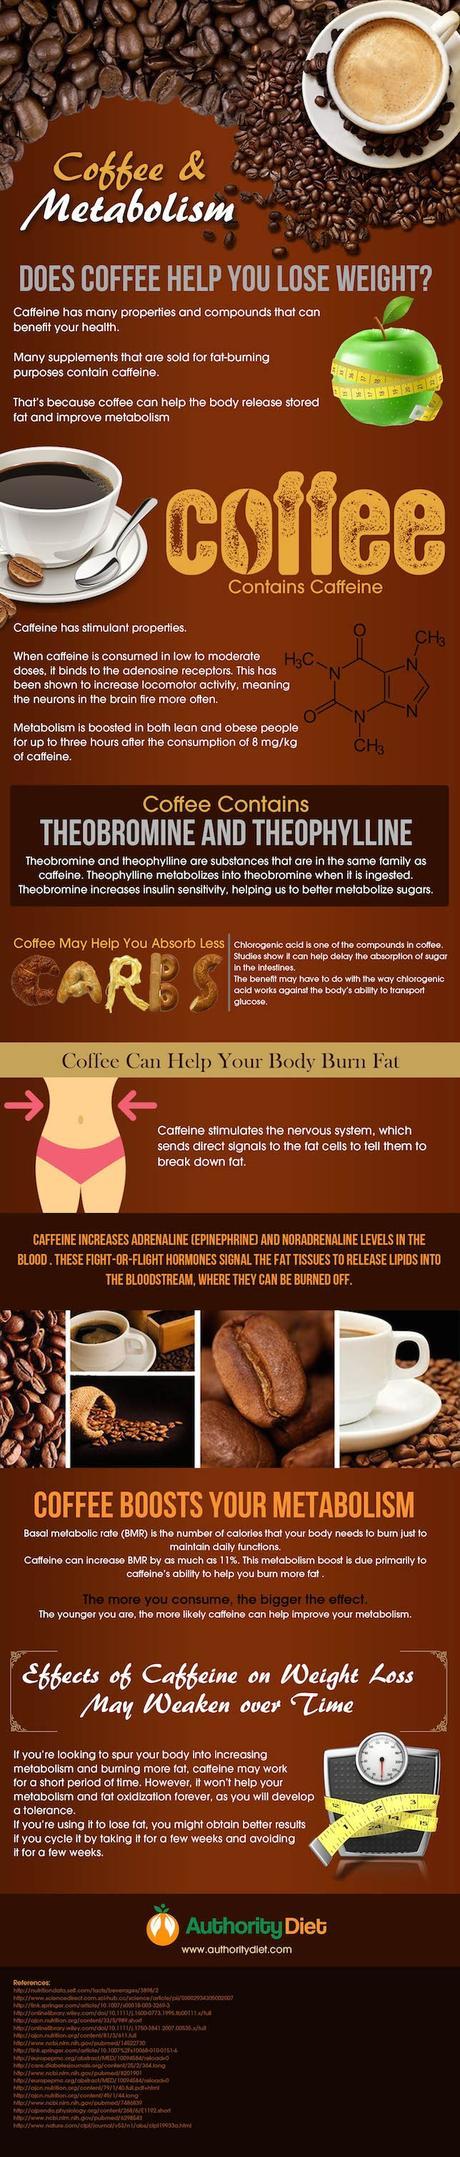 coffee metabolism infographic